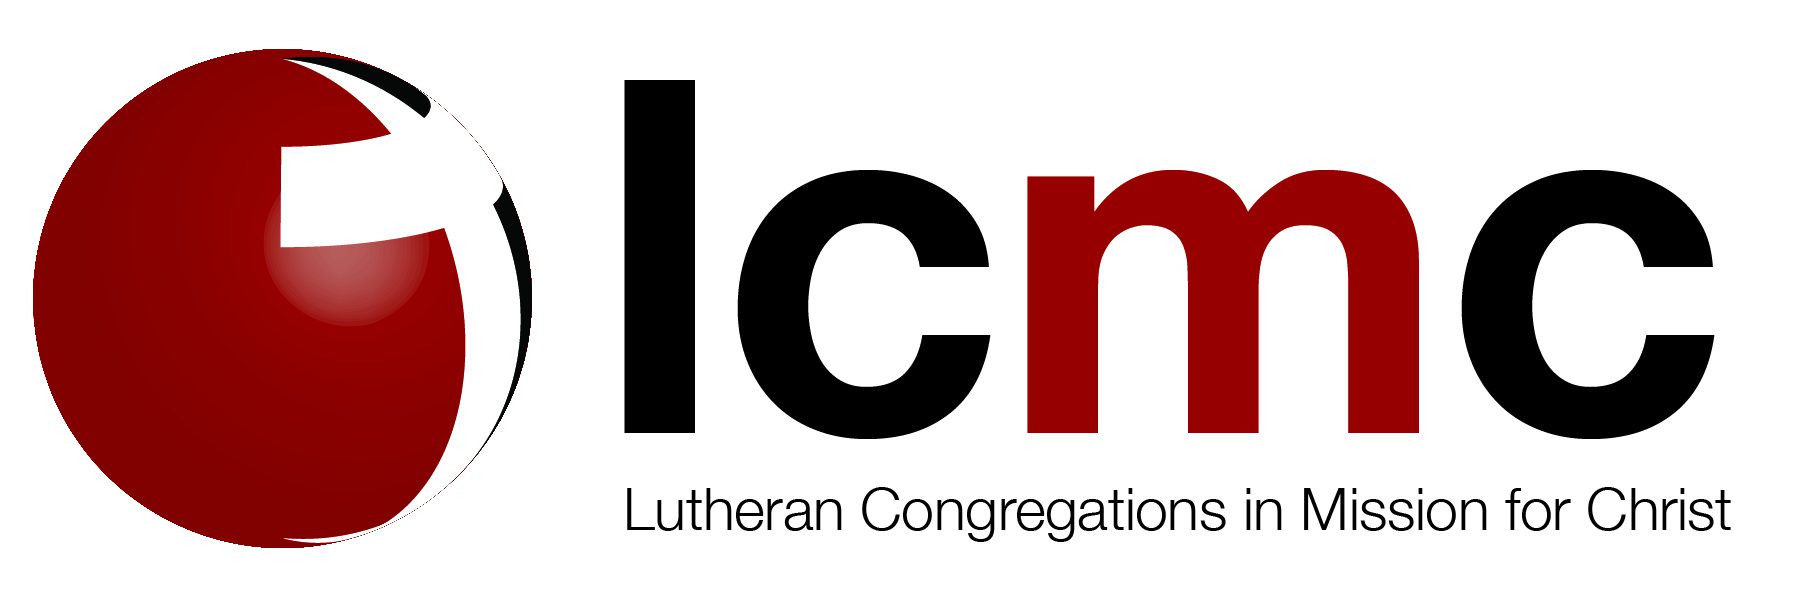 Our Redeemer's Lutheran Church